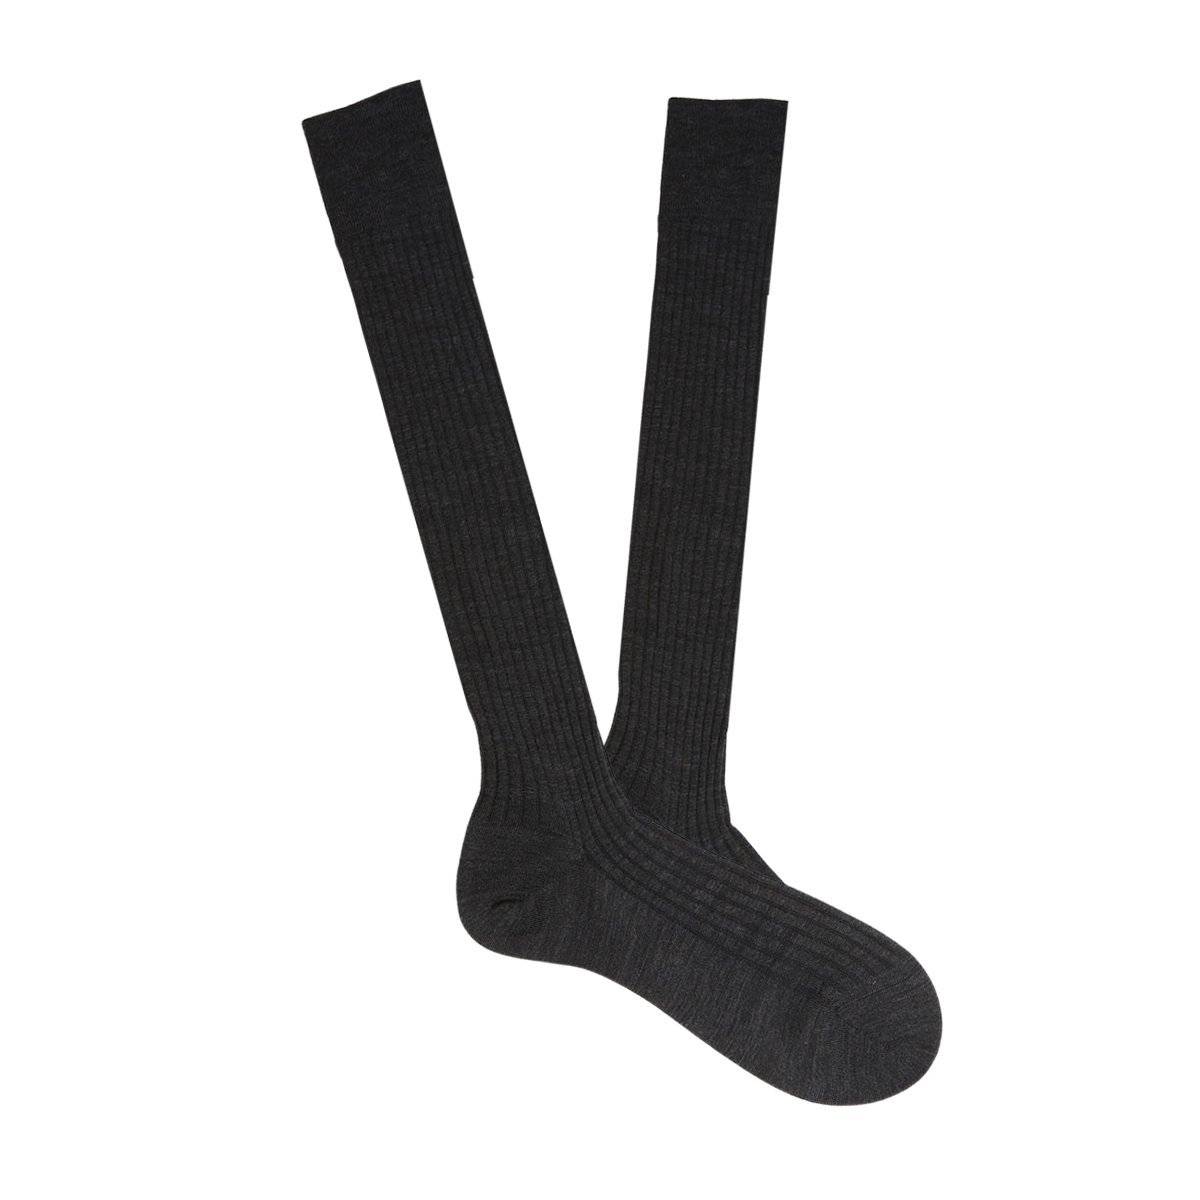 Pantherella Grey Merino Wool Ribbed Knee Socks Feature